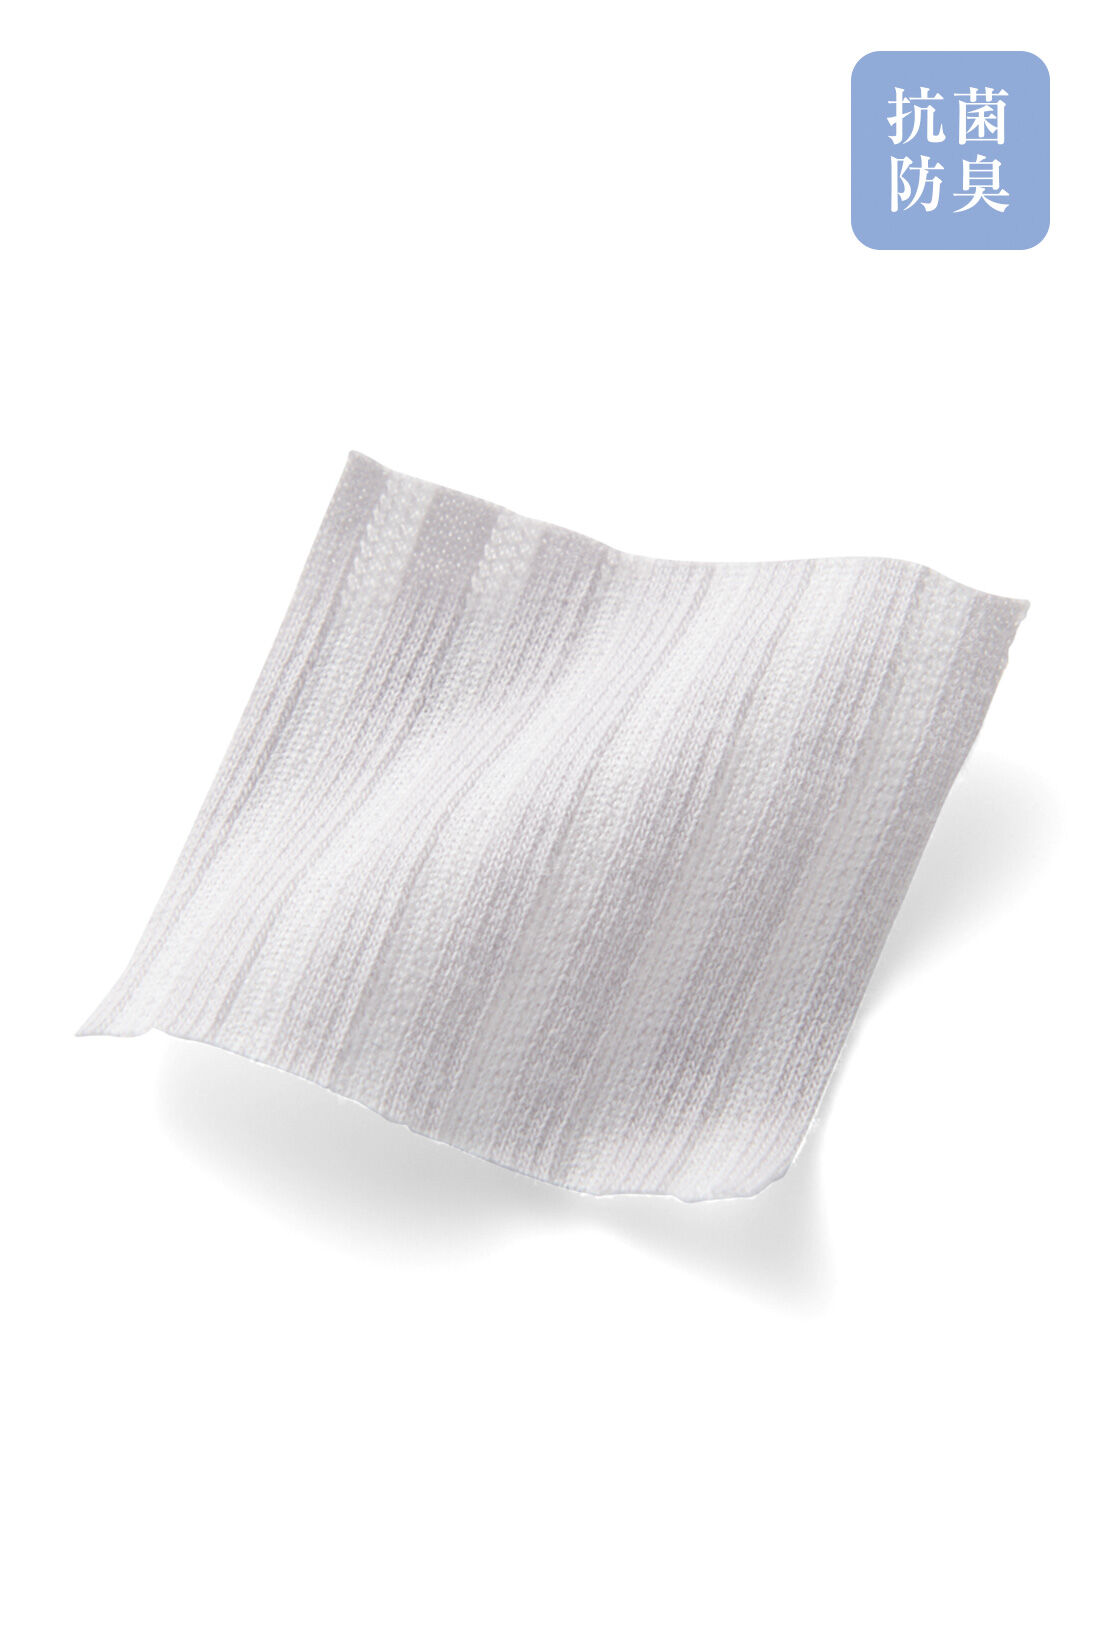 IEDIT|IEDIT[イディット]　抗菌防臭がうれしい きちんとシャツ見えしてらくちん クレリック仕立ての美ノビブラウスの会|ストライプ風の織り柄カットソーは抗菌防臭機能付き。お家で洗えるイージーケア。